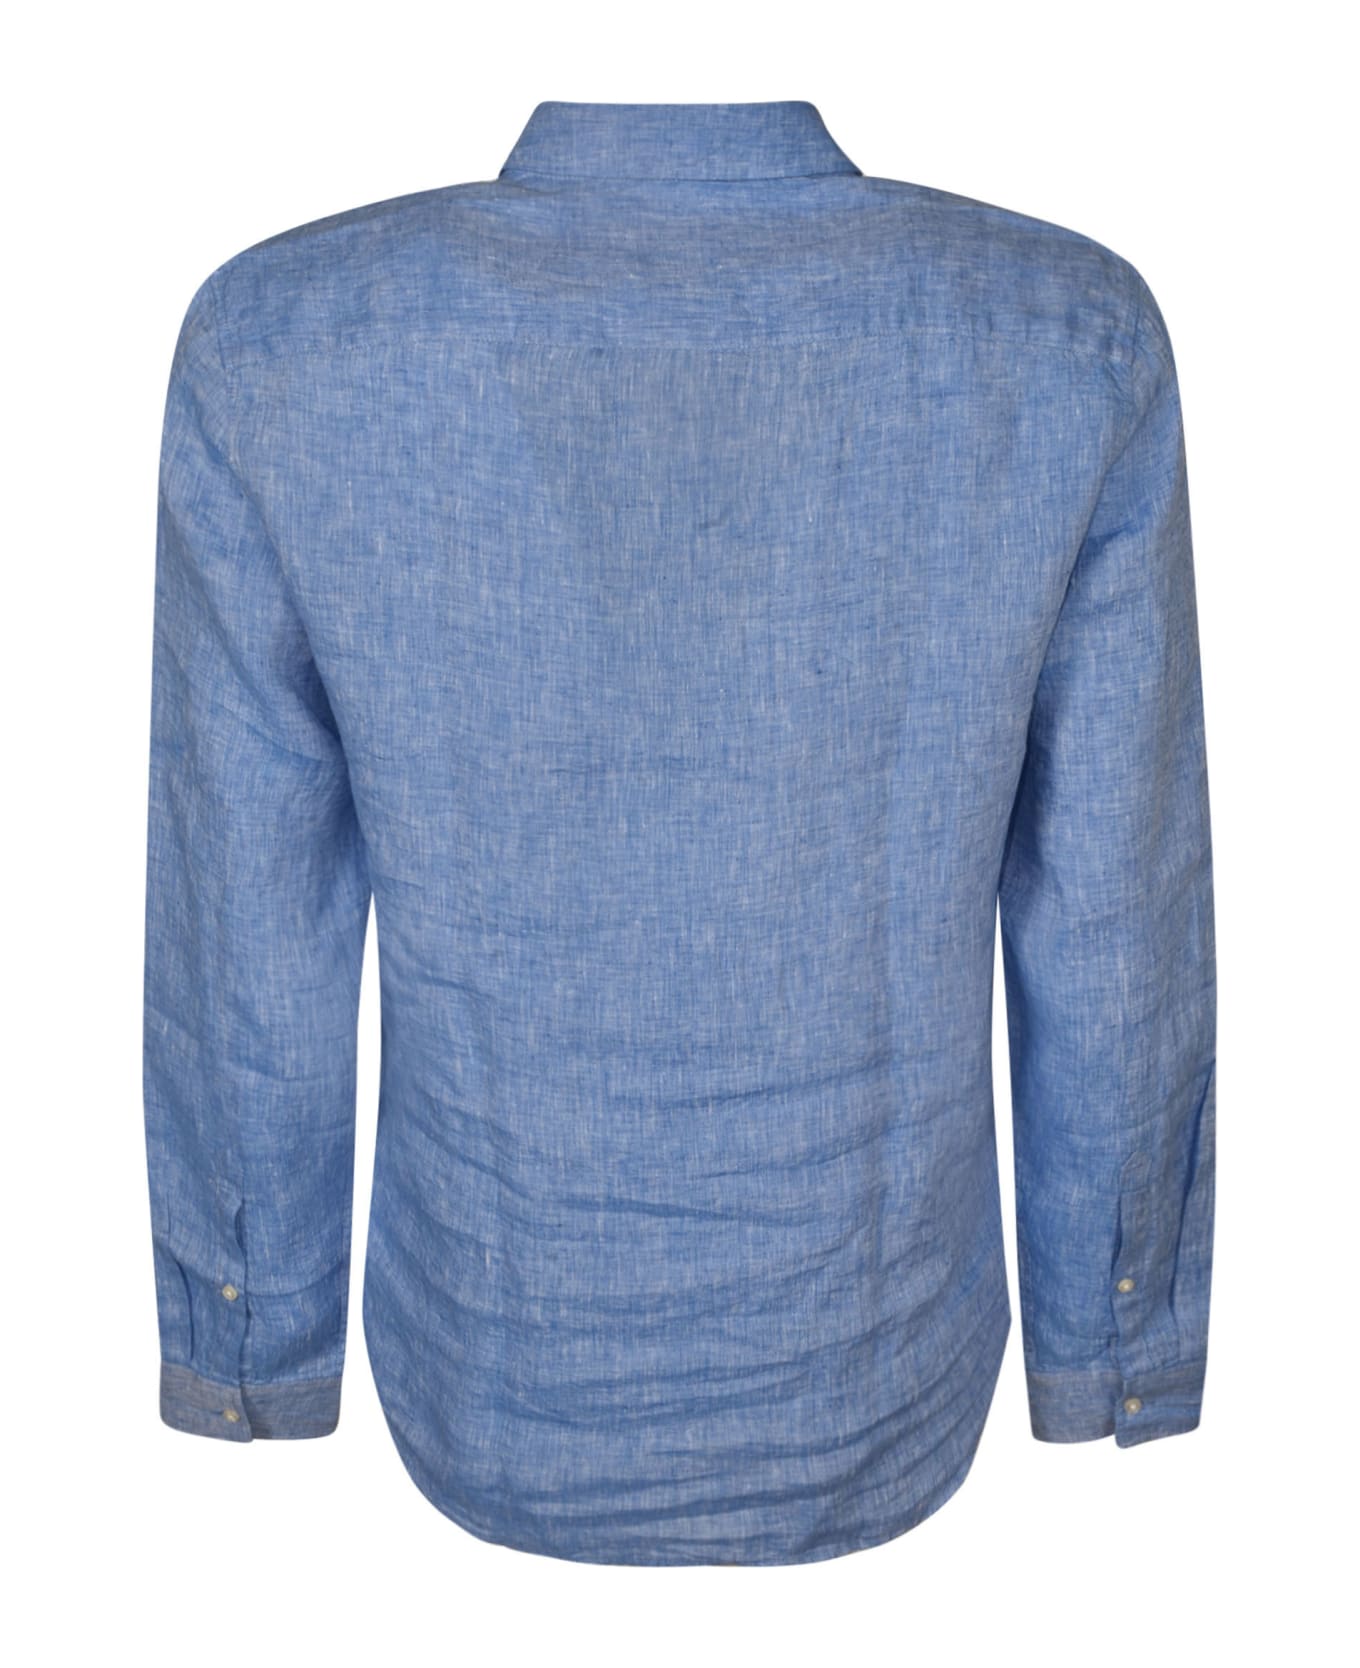 Michael Kors Classic Plain Shirt - Blue